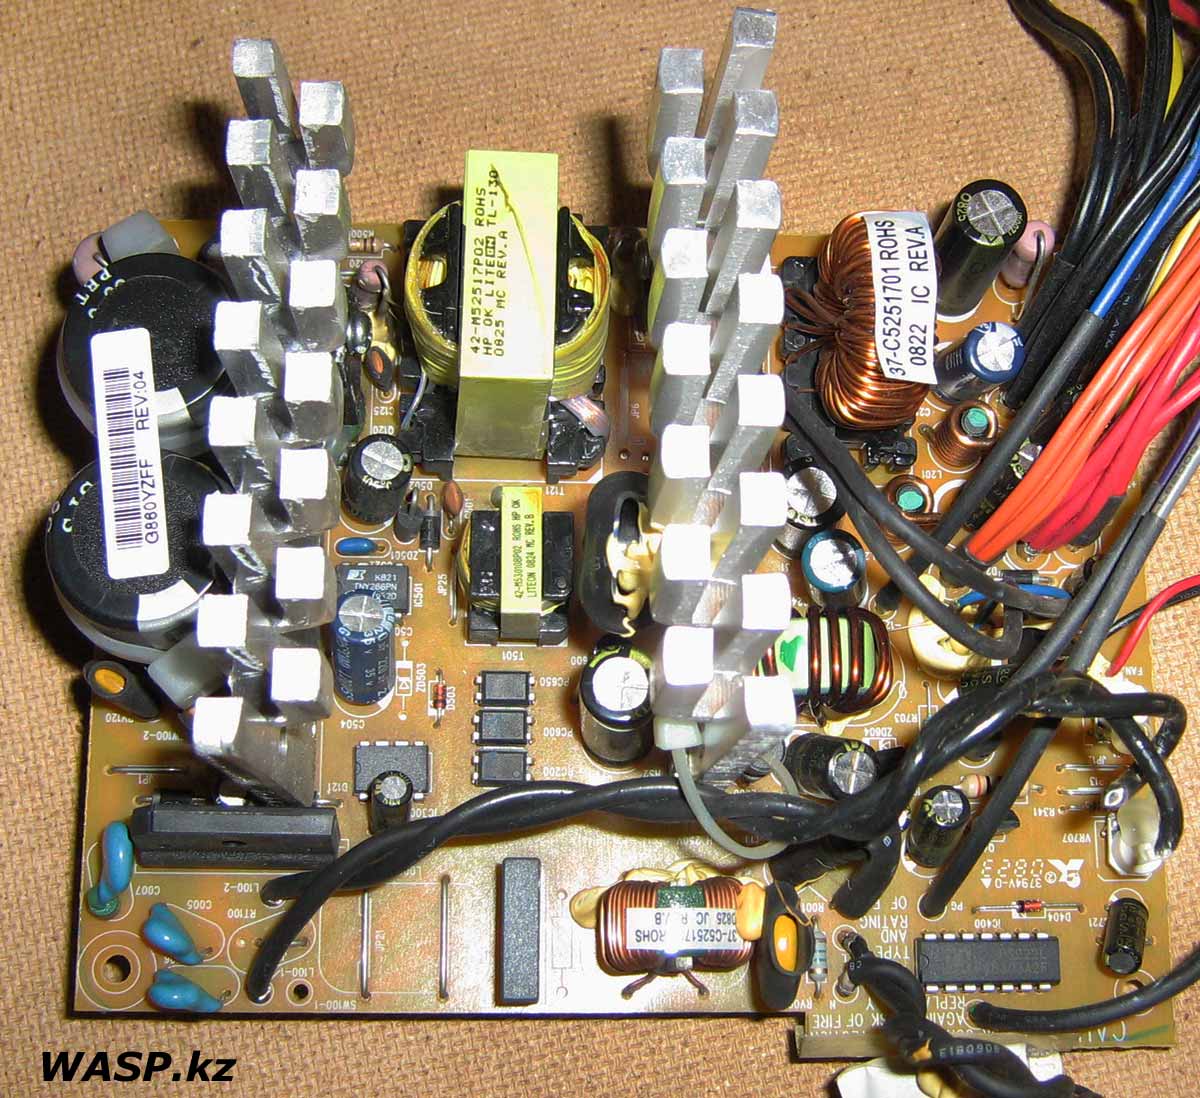 Блок питания Lite-On PE-5251-7 разборка и ремонт